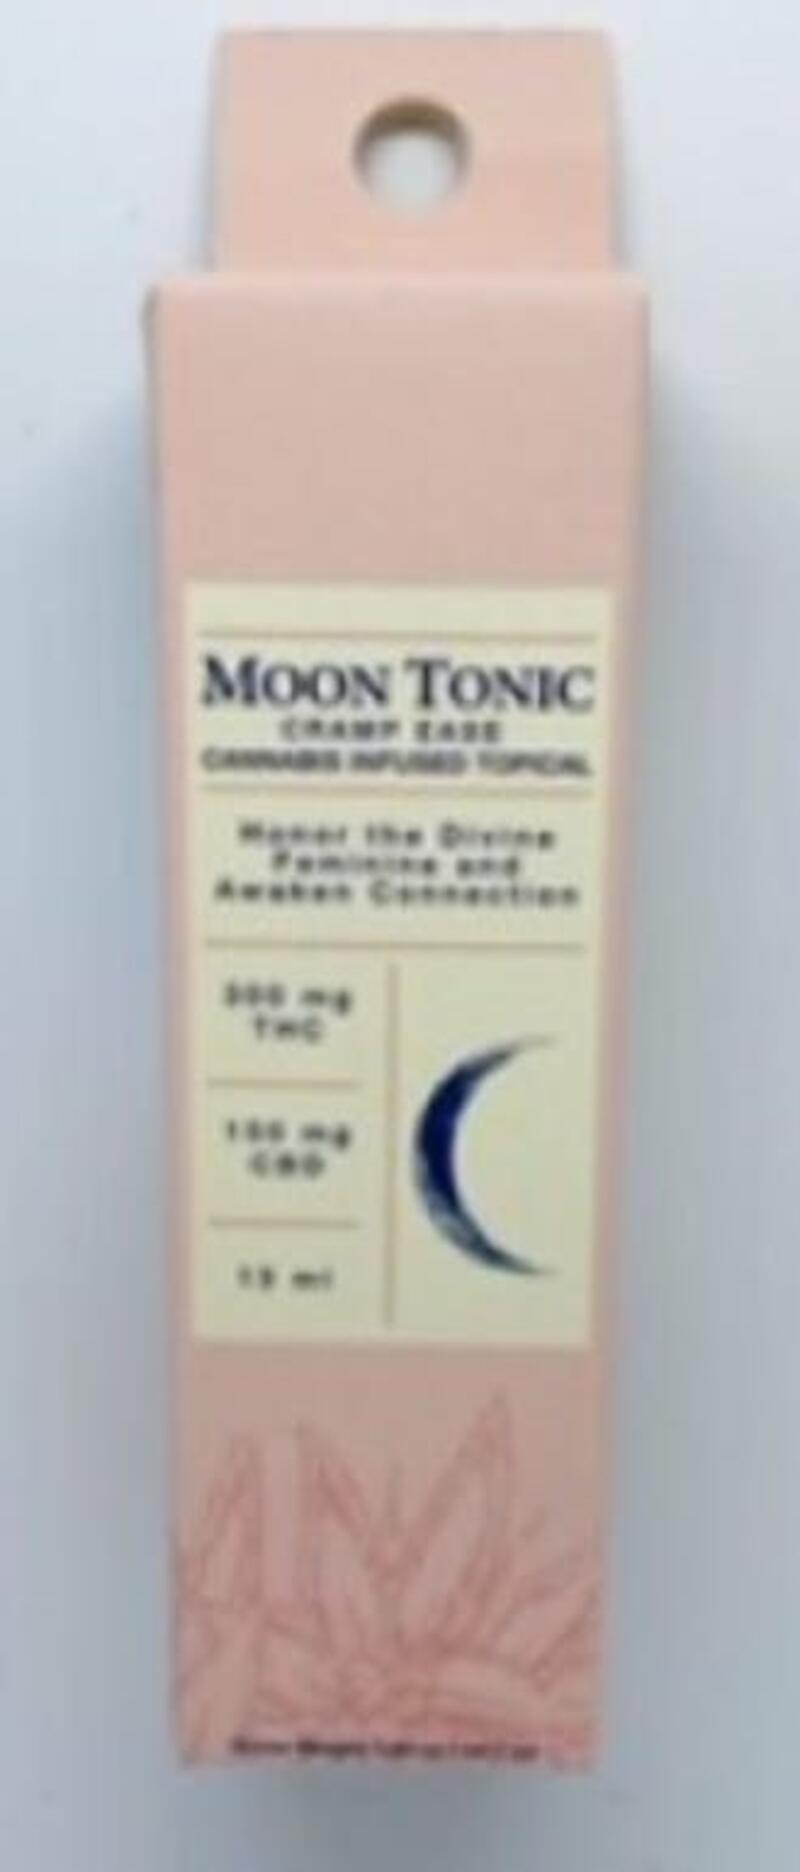 Moon Tonic: Cramp Ease oil